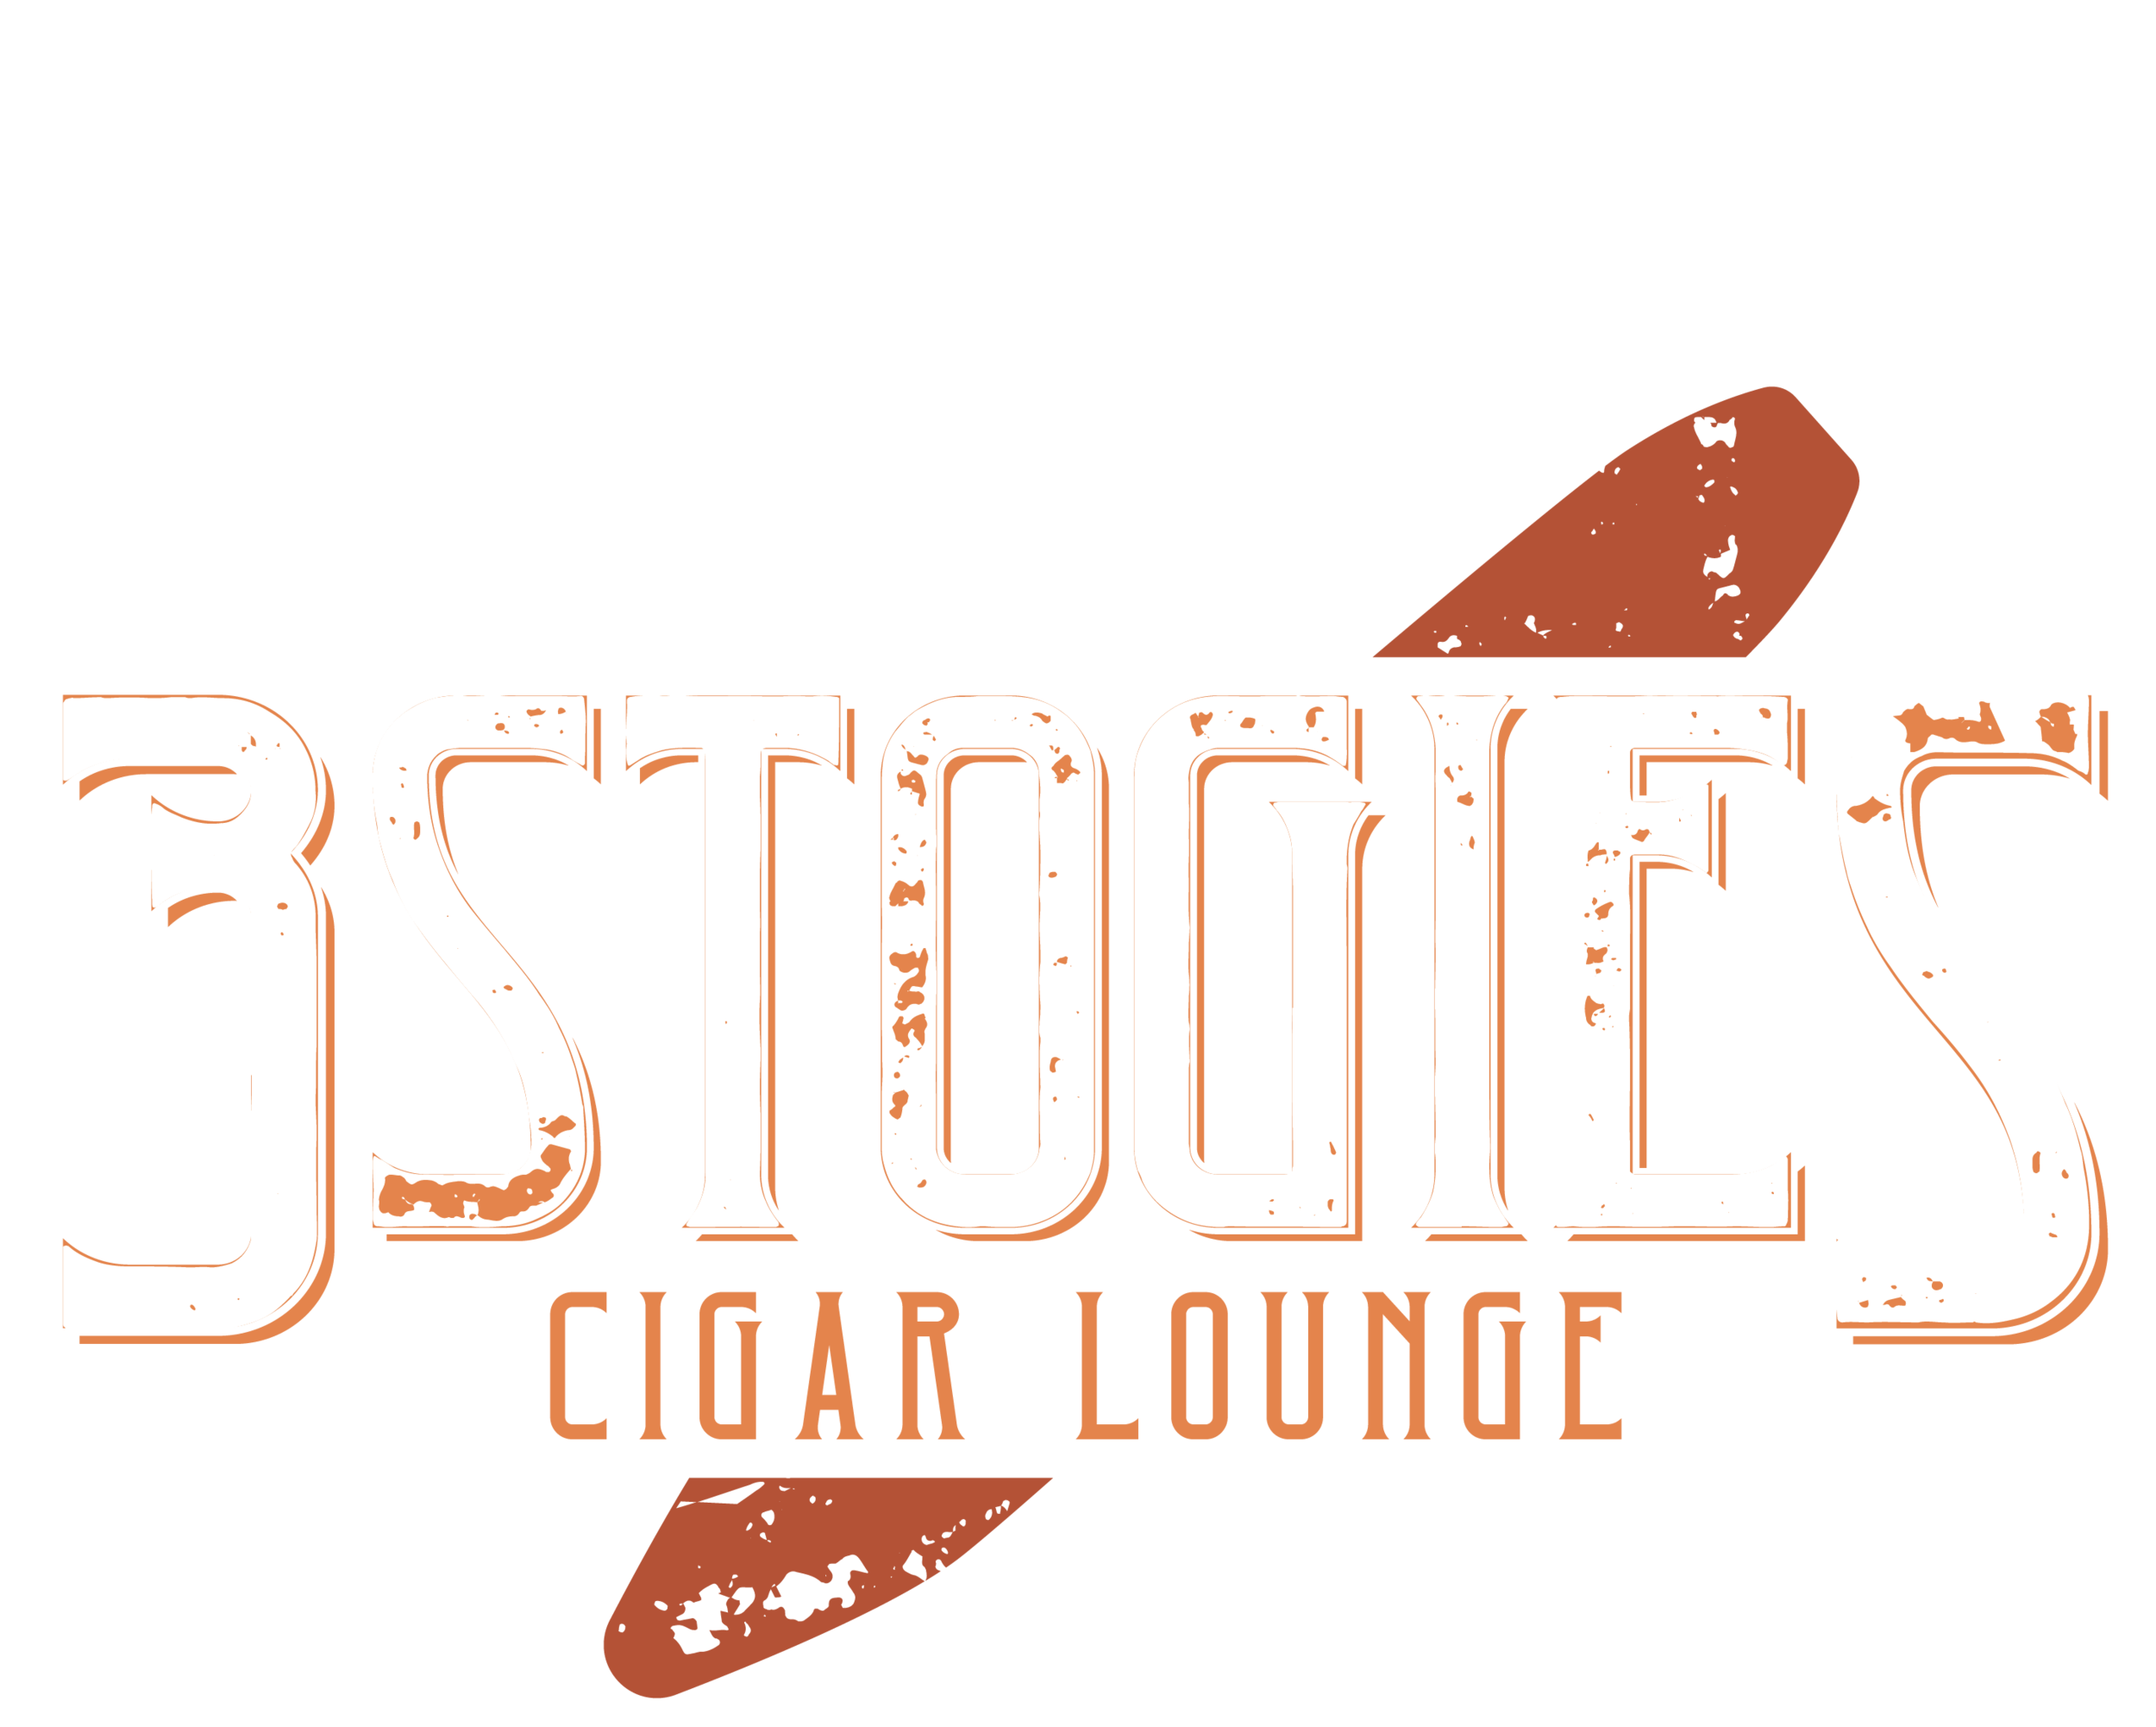 3Stogies Mobile Cigar Lounge